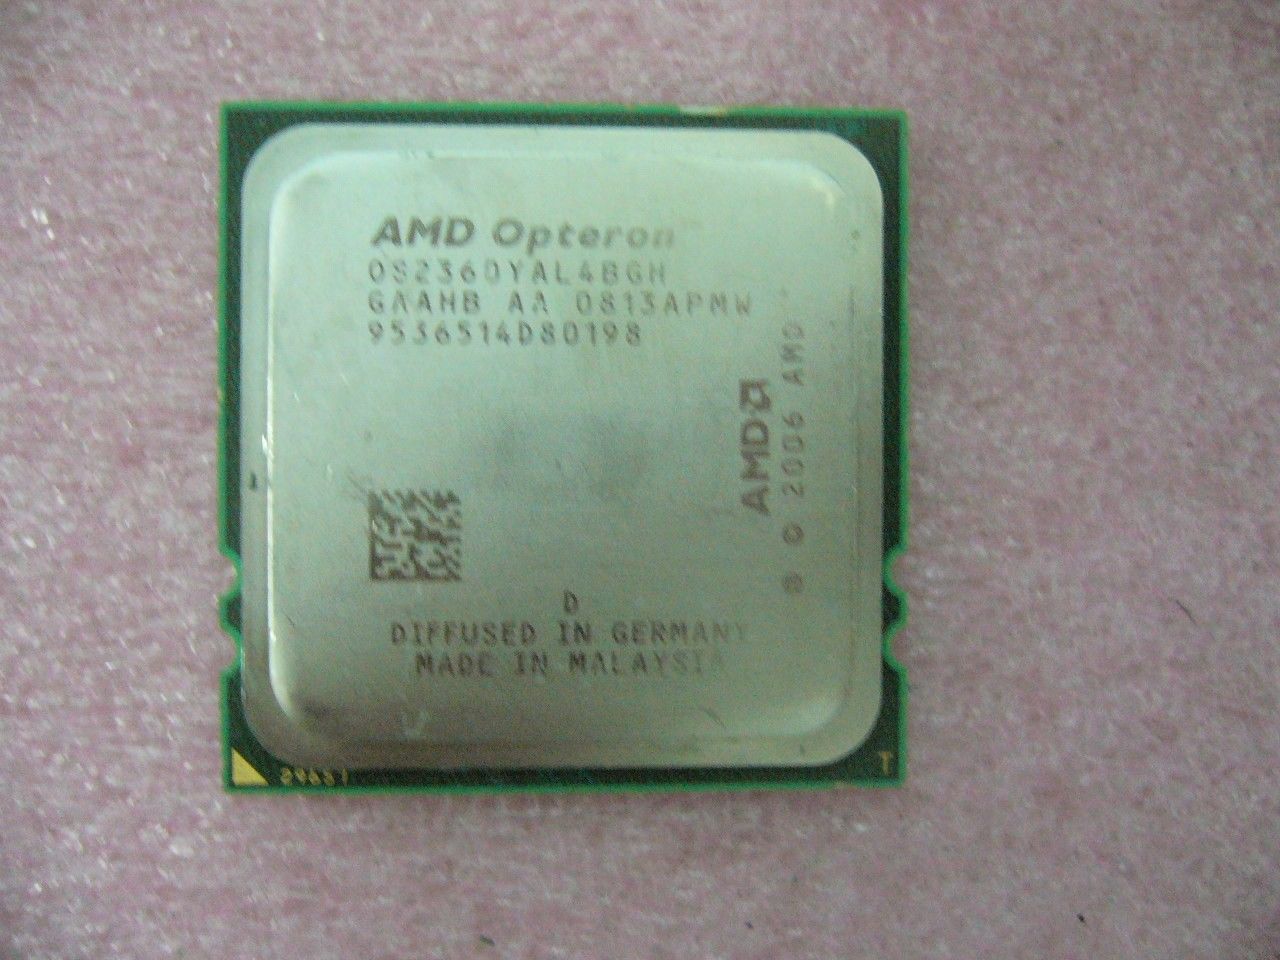 QTY 1x AMD Opteron 2360 SE 2.5 GHz Quad-Core (OS2360YAL4BGH) CPU Socket F 1207 - Click Image to Close